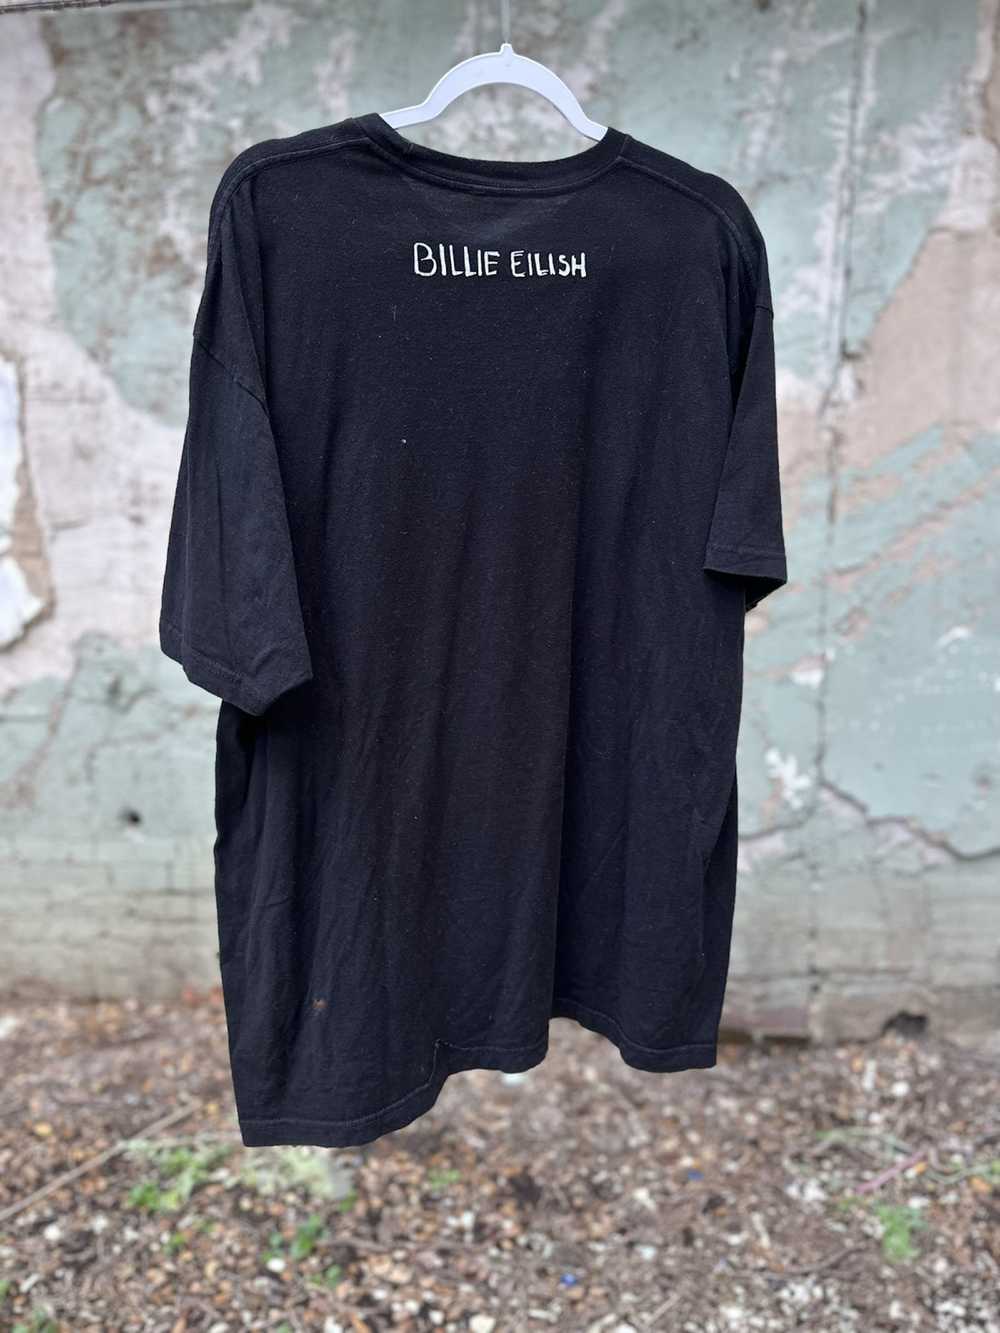 Billie Eilish × Streetwear Billie Eillish Tshirt - image 2